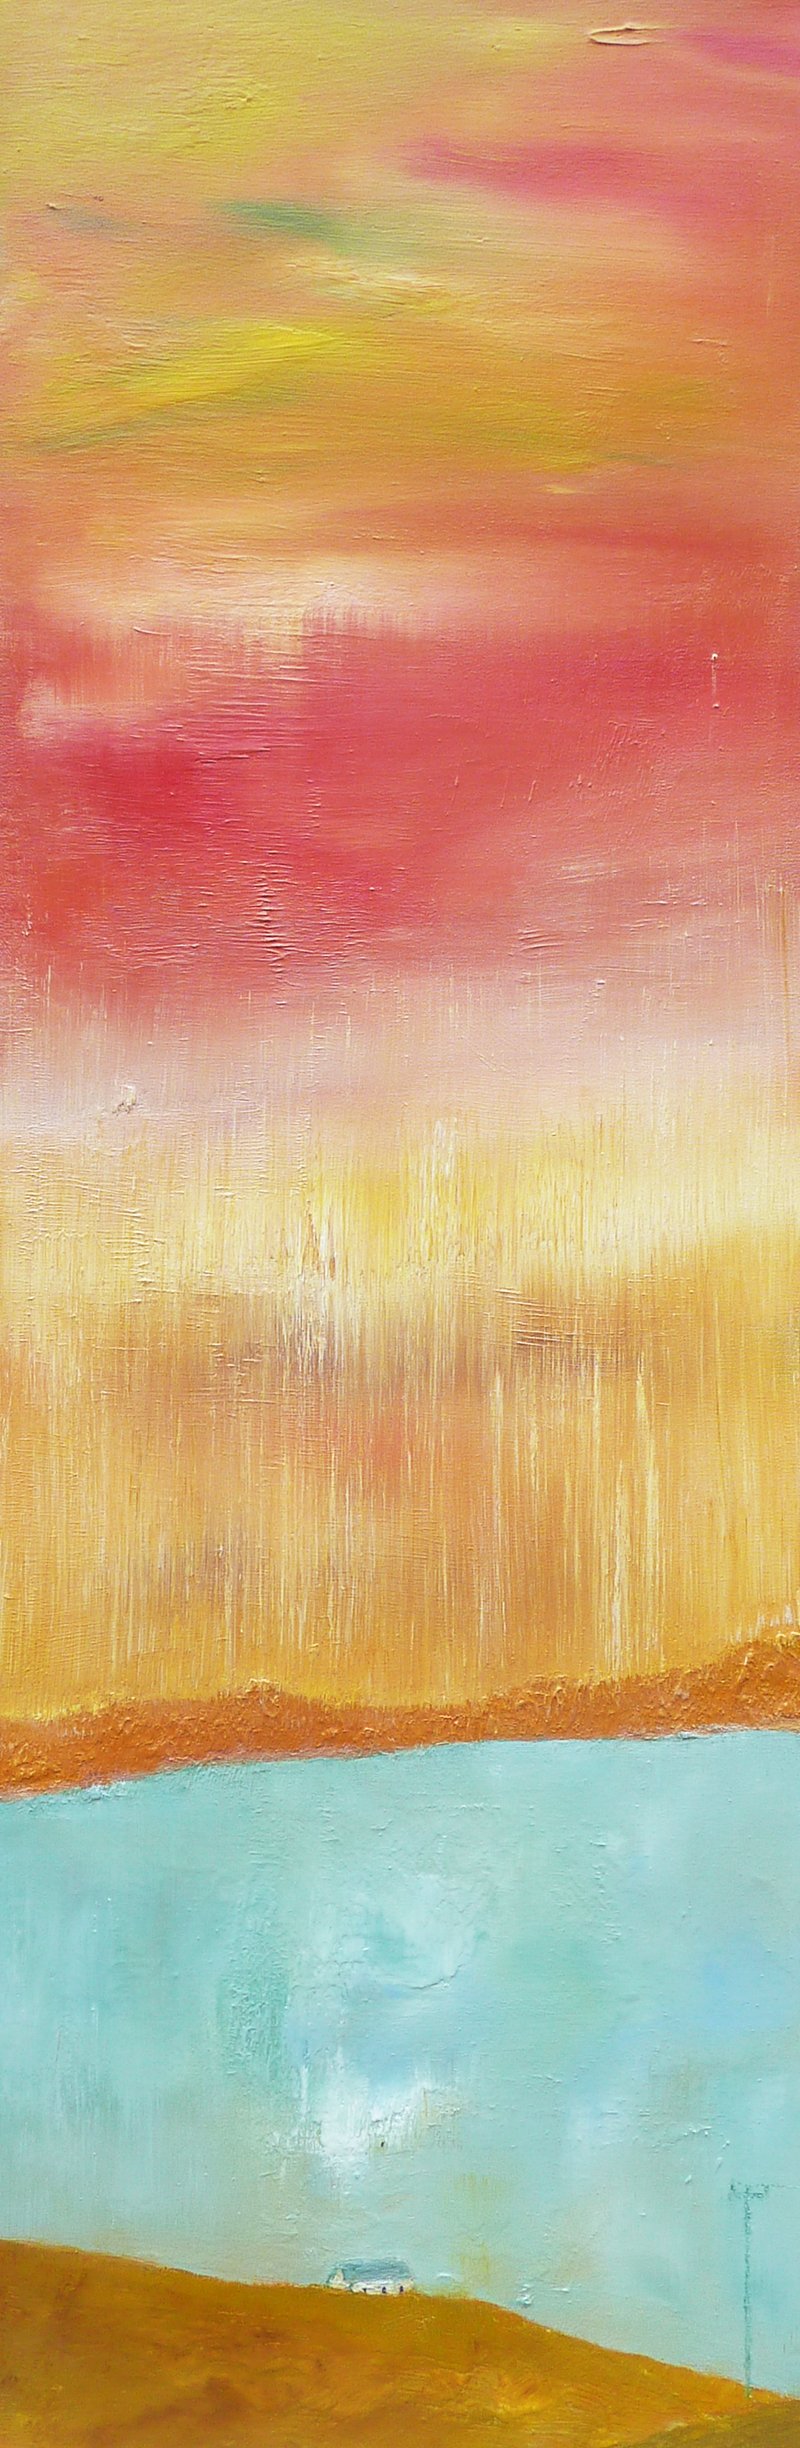 Solitude - Oil on Canvas - 122cm x 46cm